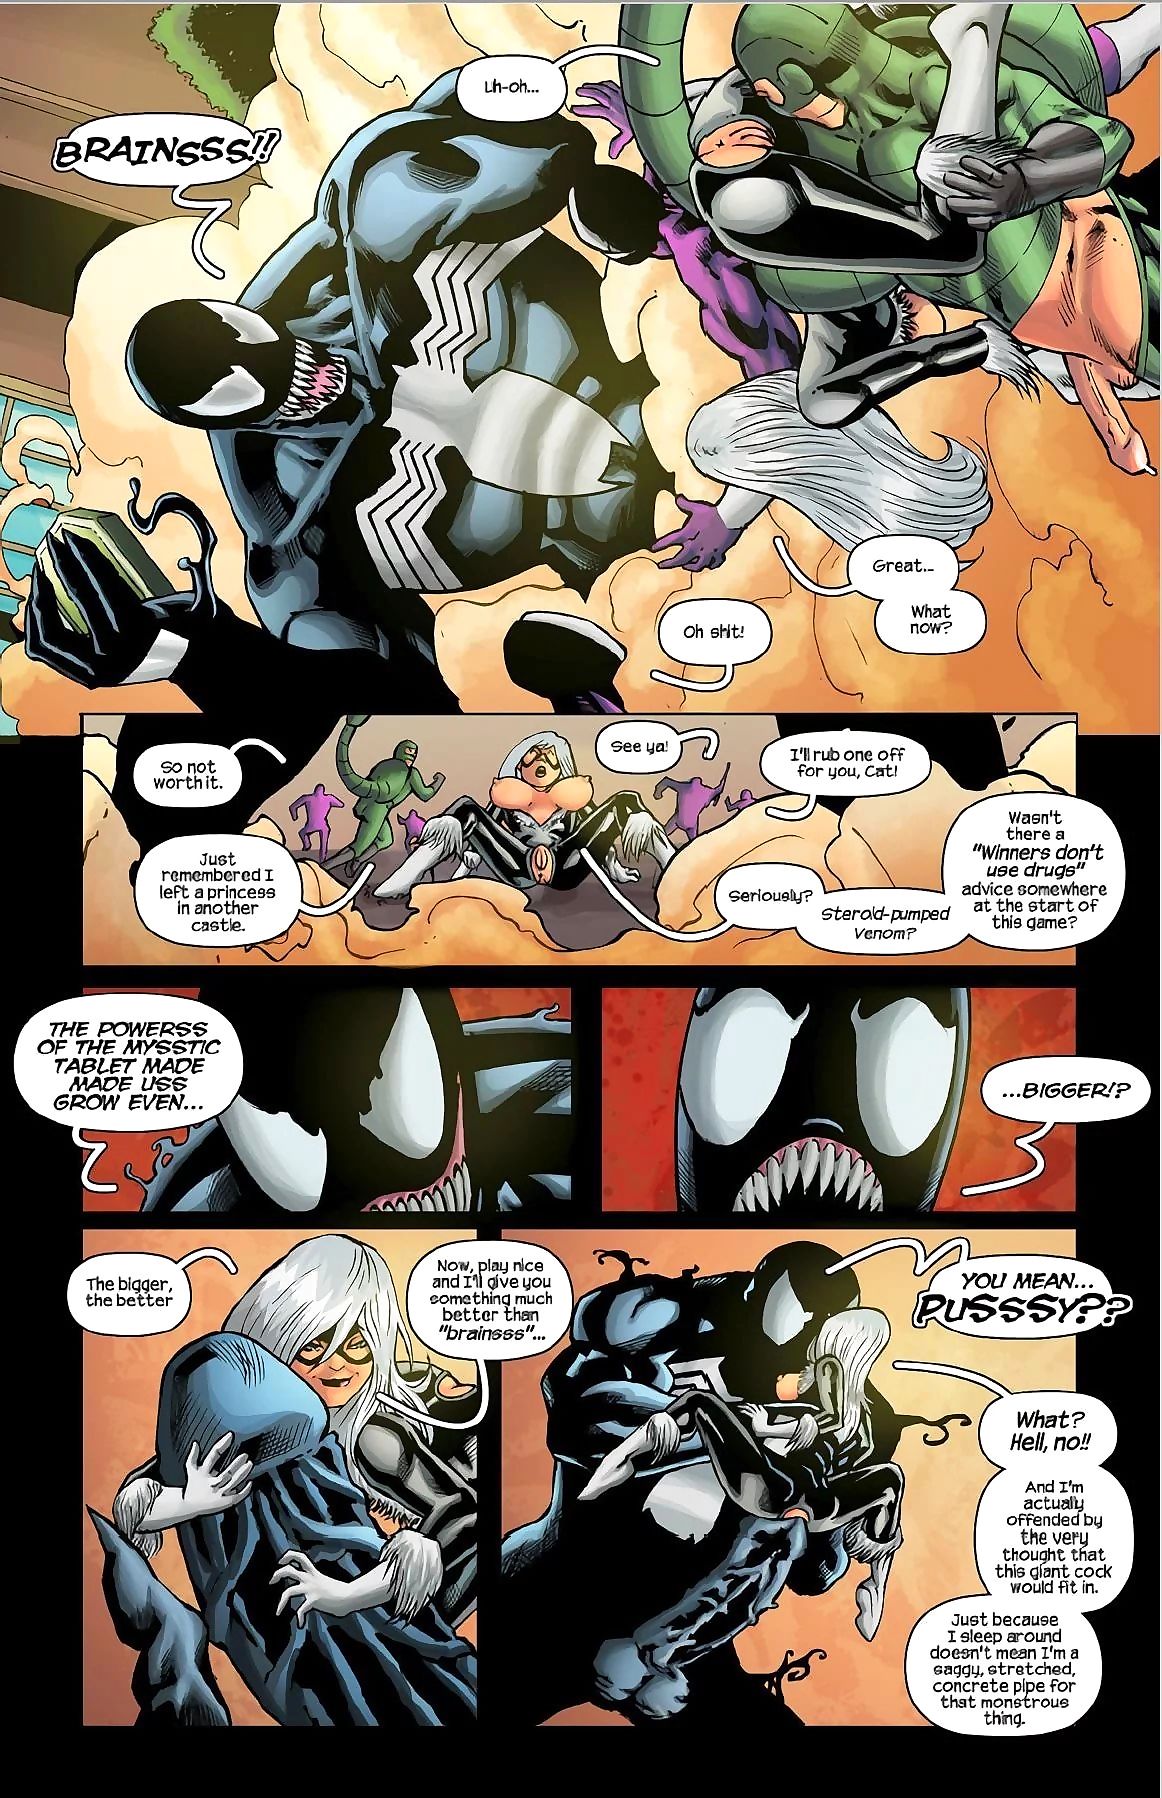 Tracy scops spiderman, l' ’91 arcade Jeu page 1